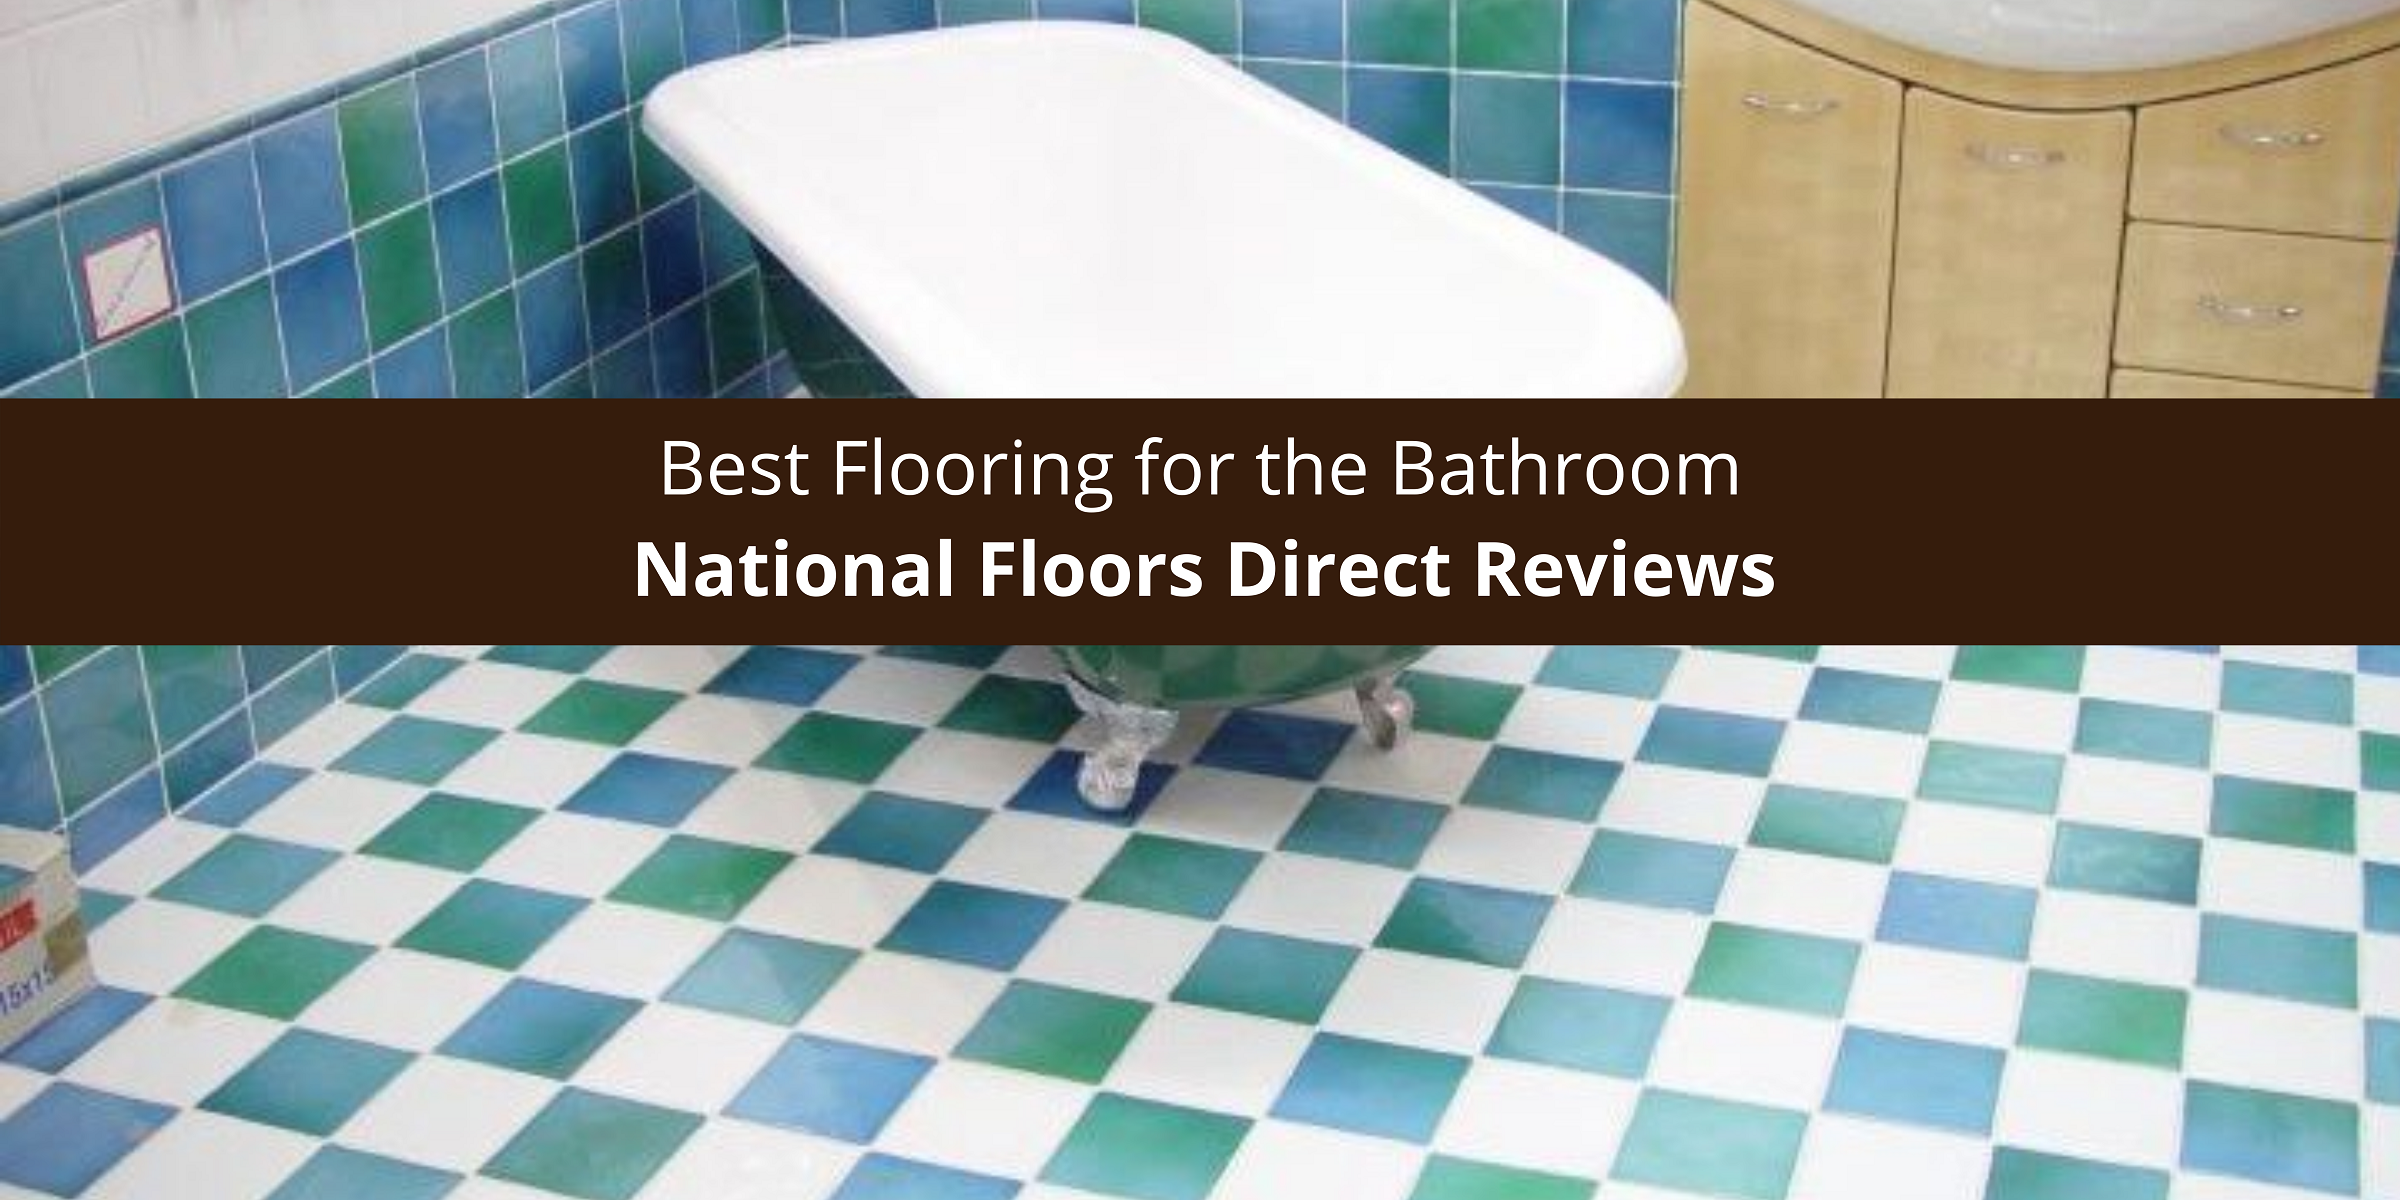 National Floors Direct: Best Flooring for the Bathroom